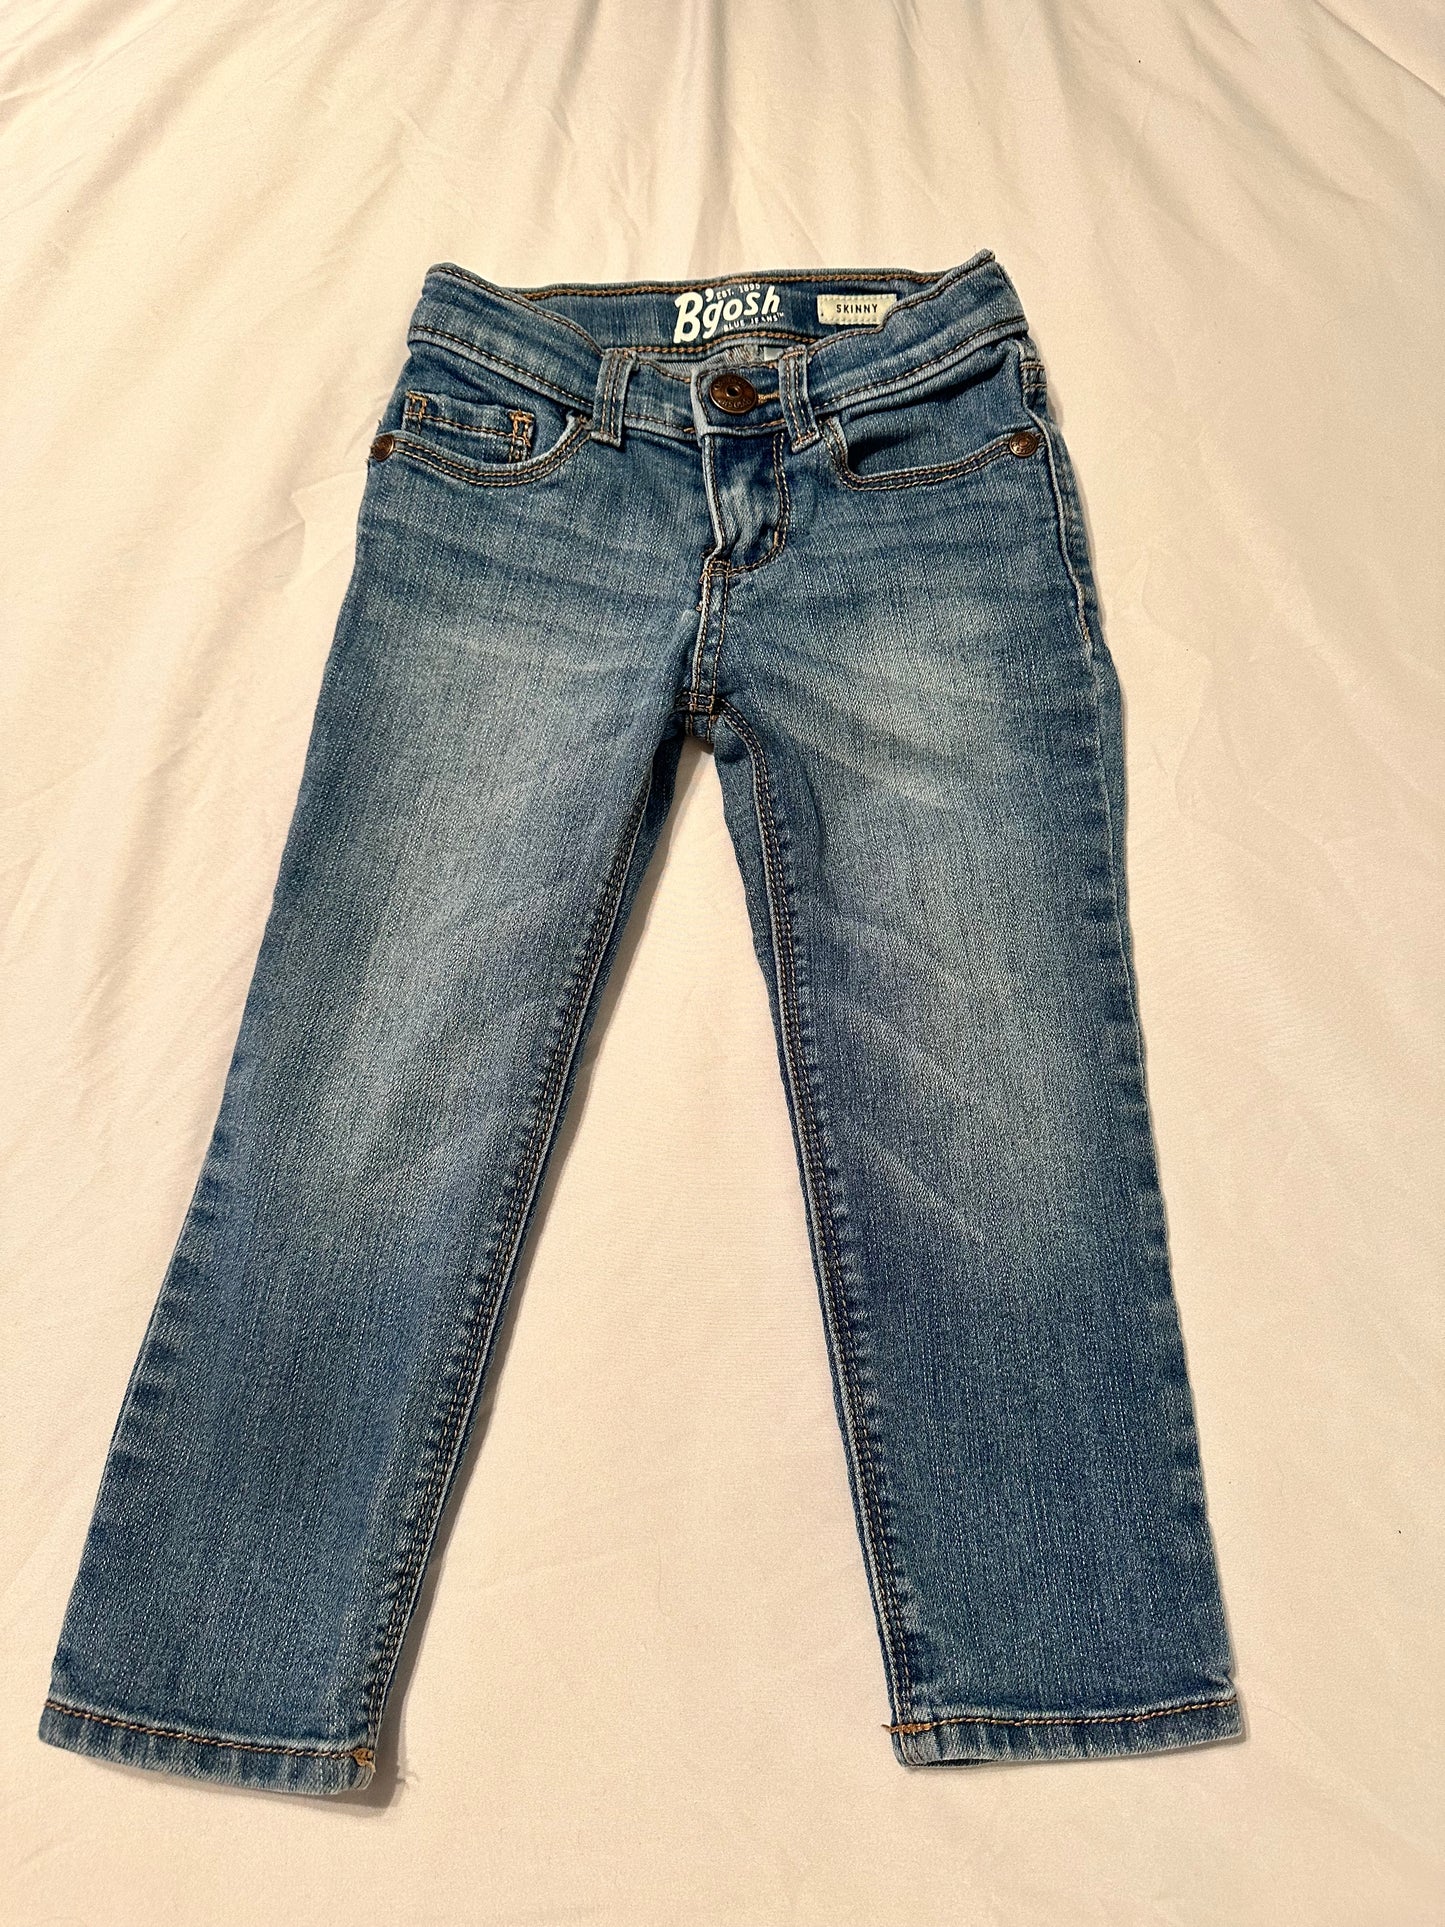 Girls Osh Kosh skinny jeans, 2T